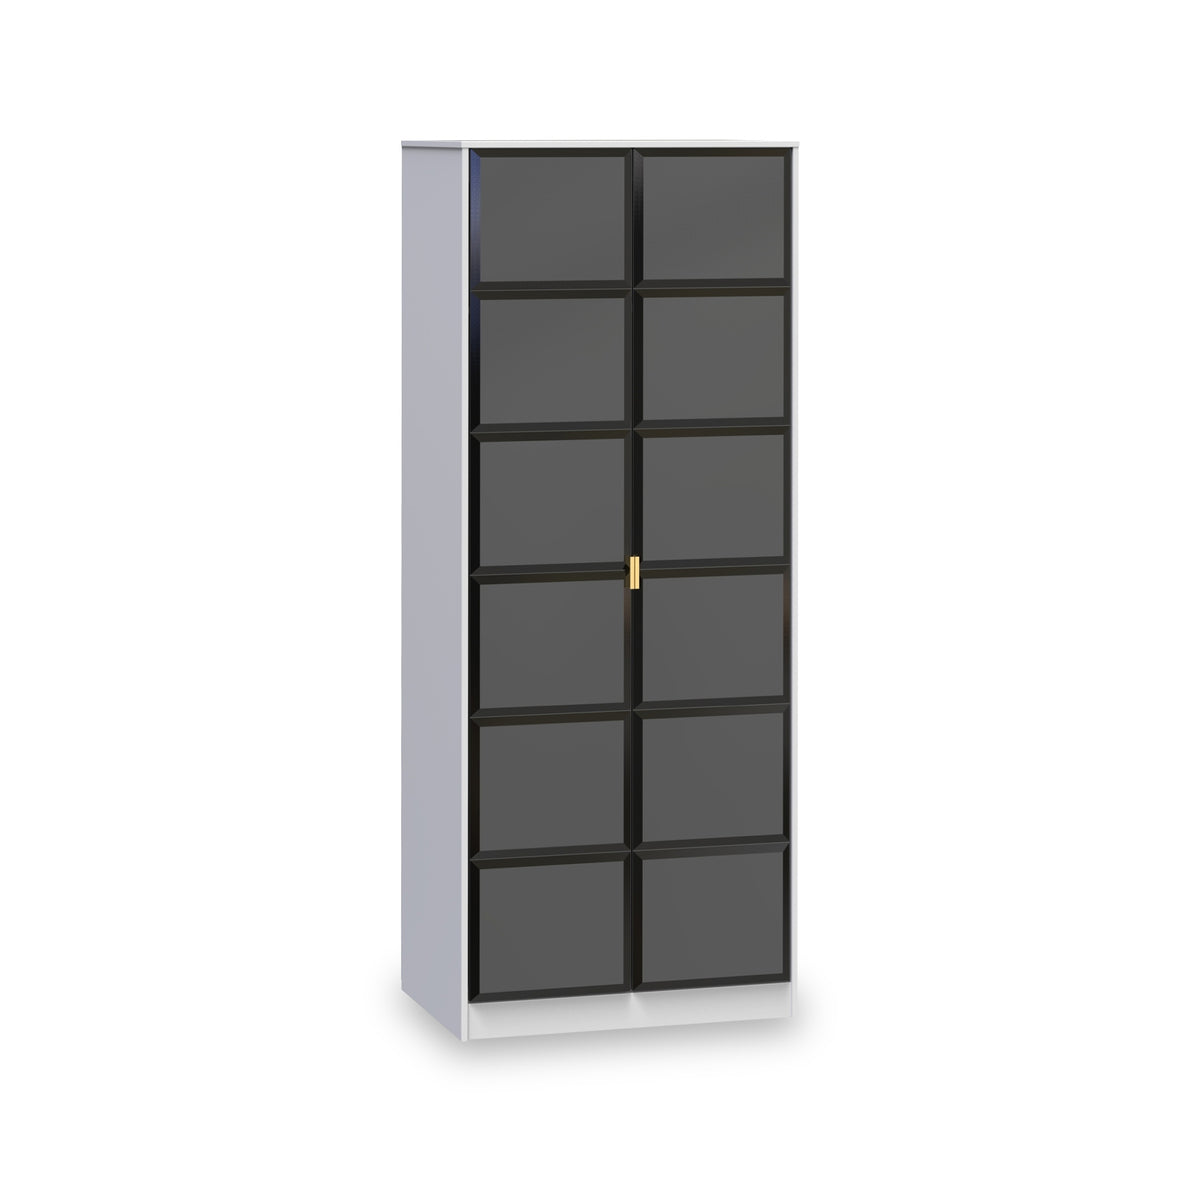 Harlow Black & White 2 Door Panelled Wardrobe from Roseland